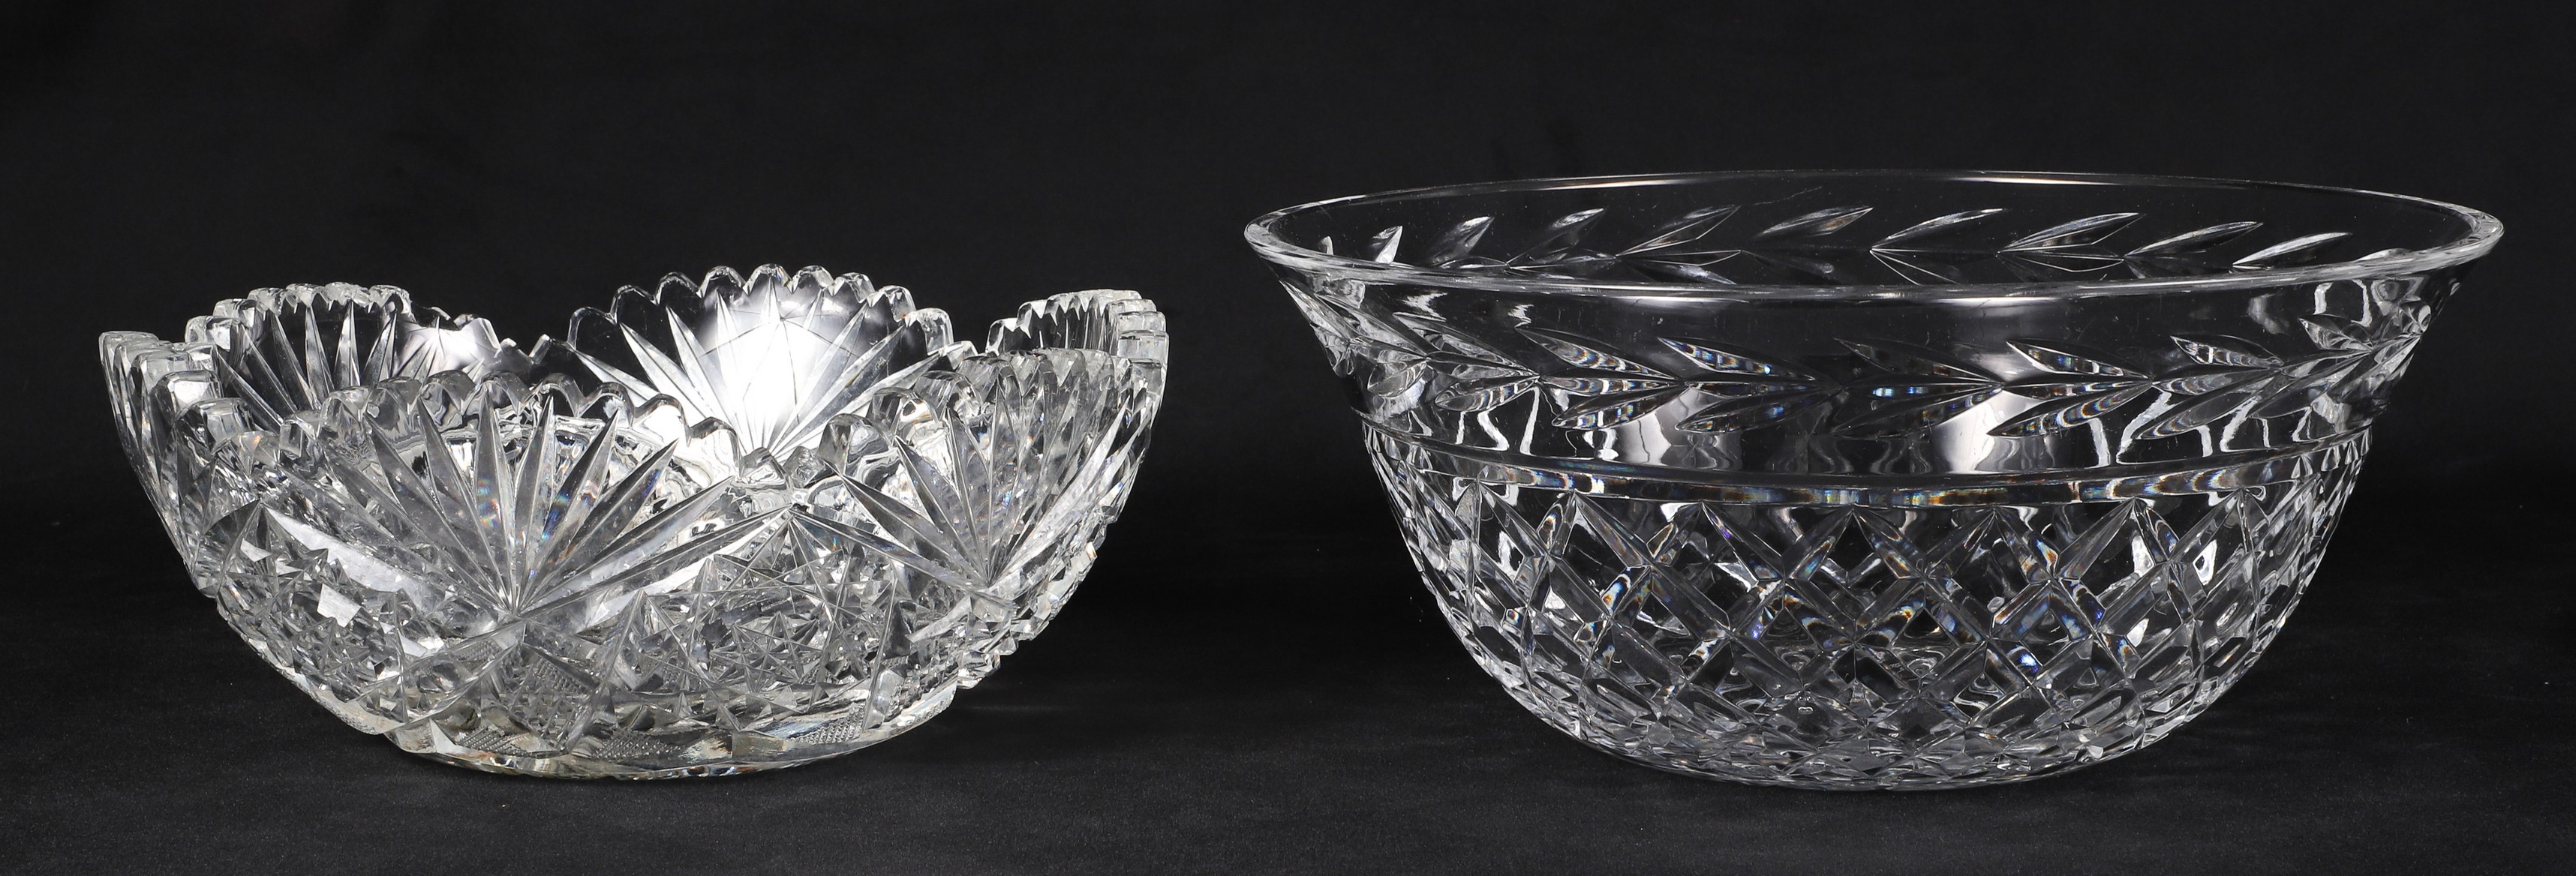 (2) Crystal bowls, c/o Waterford